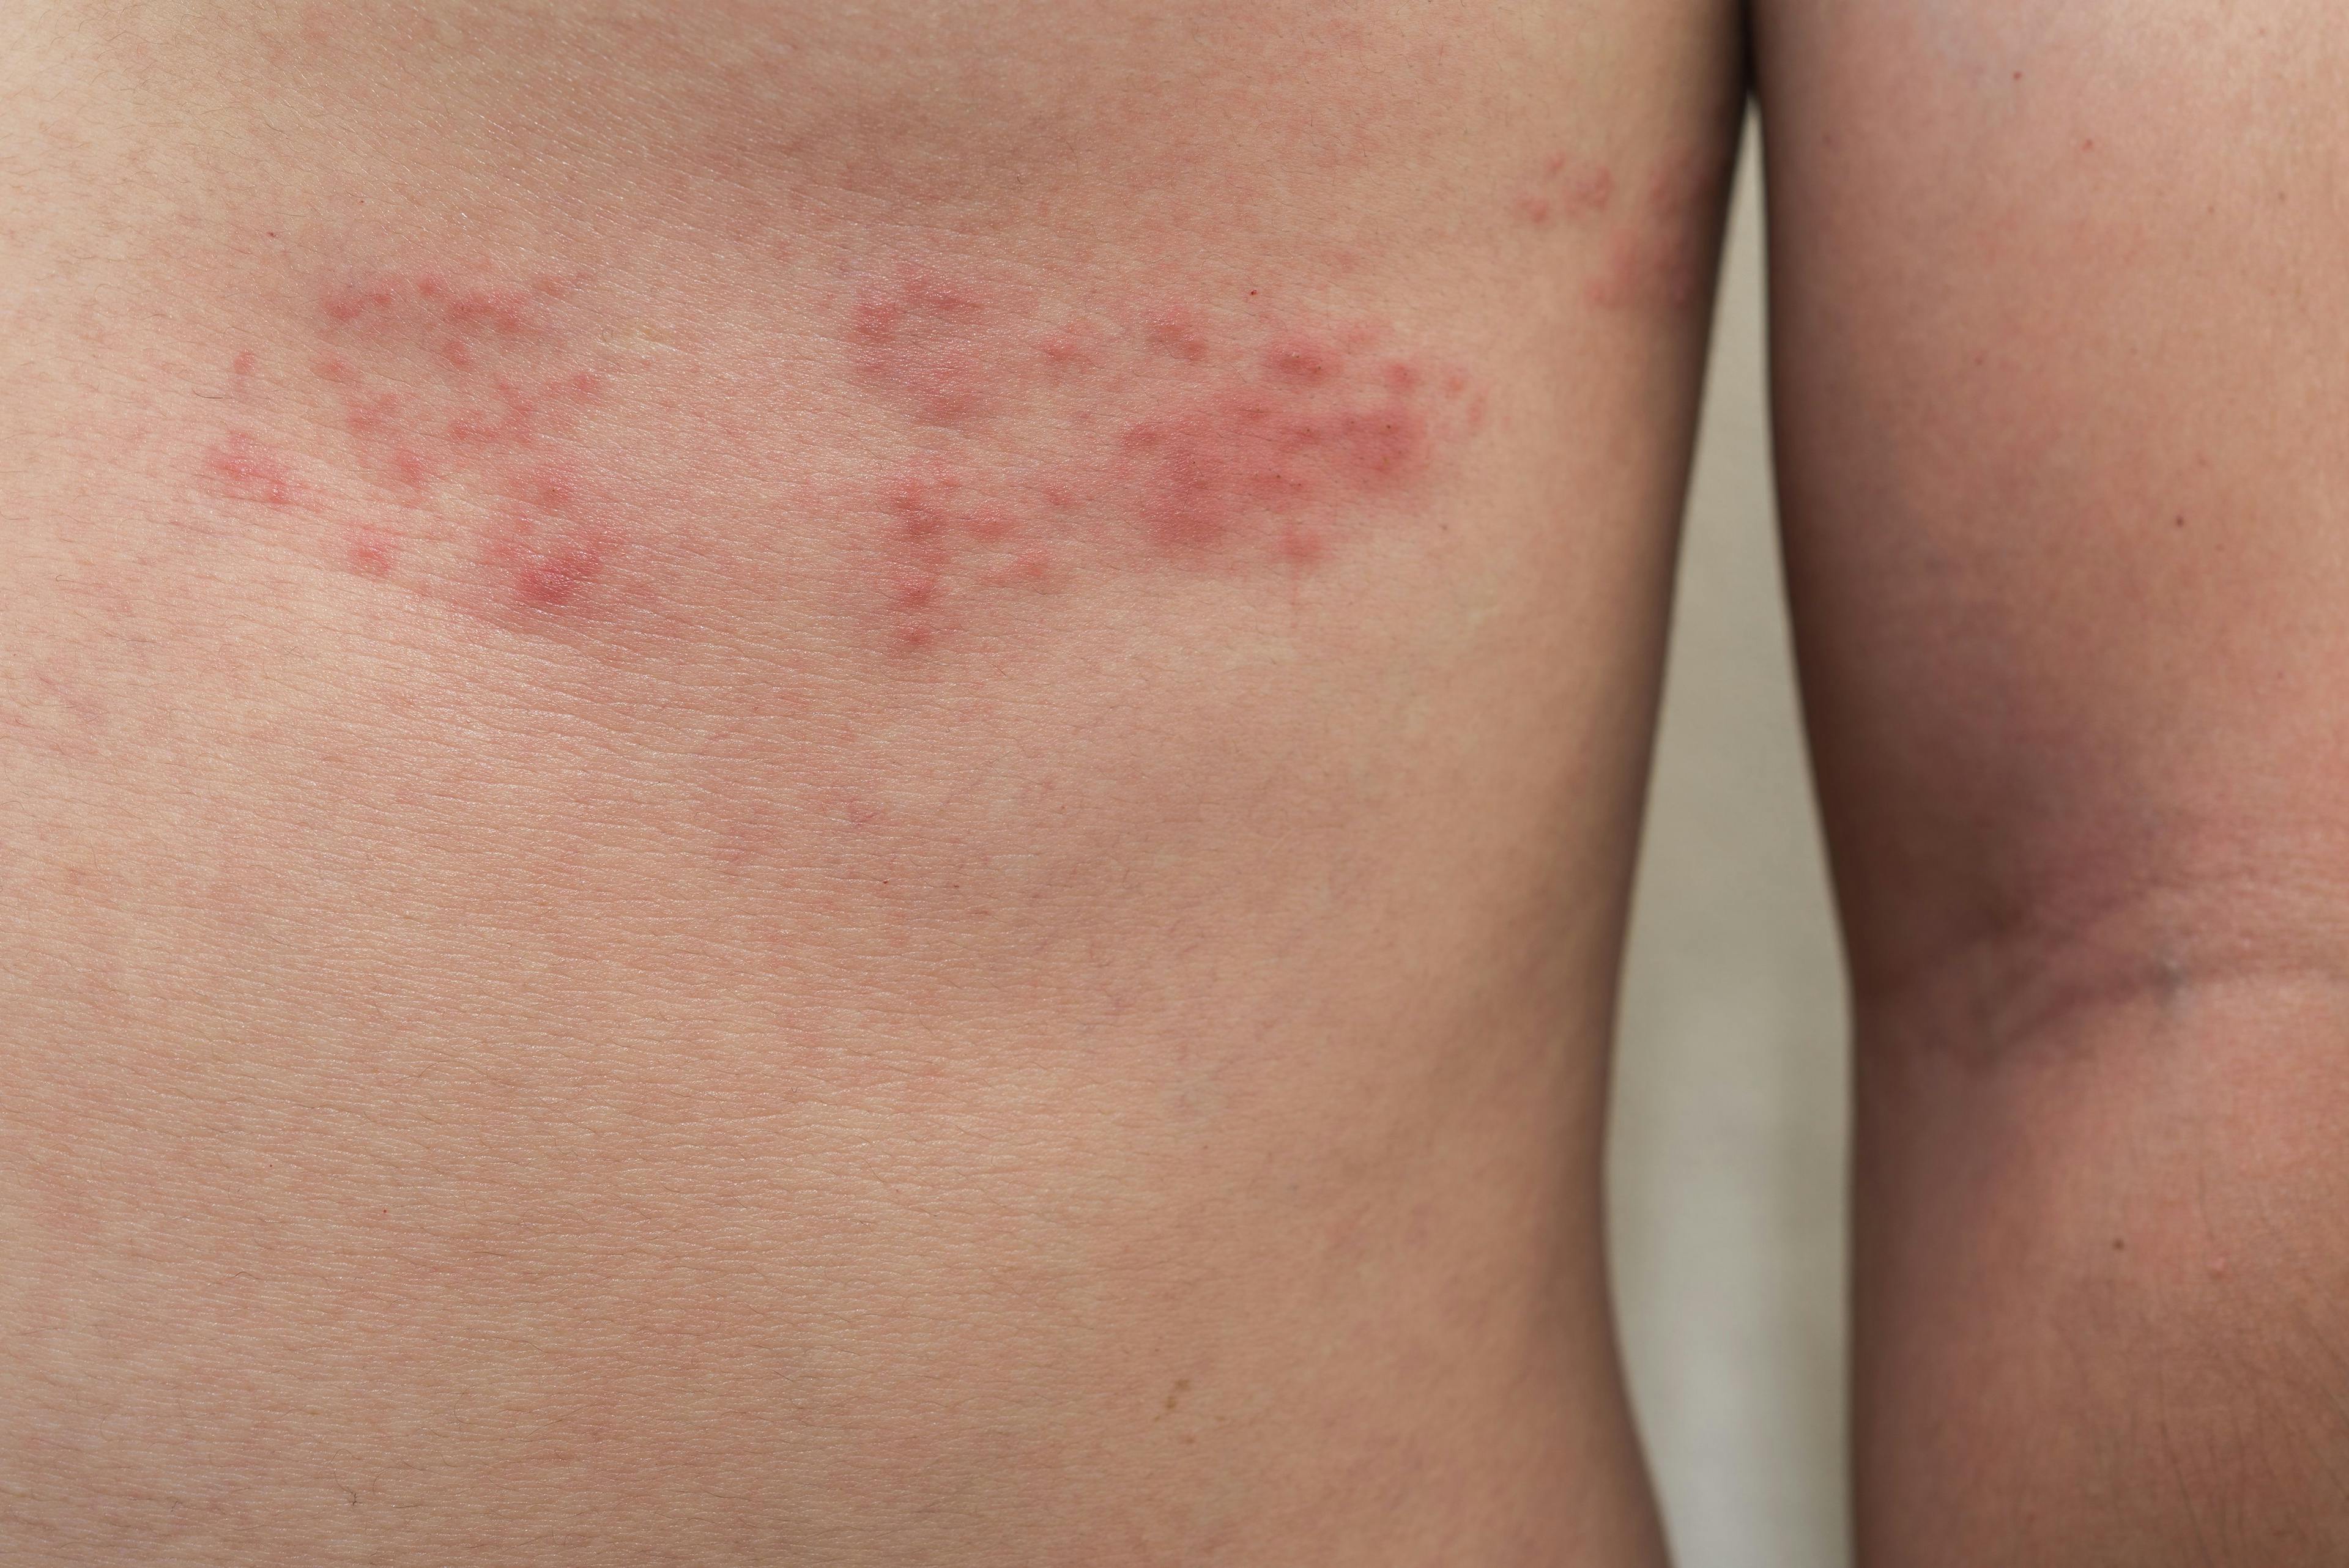 shingles rash on abdomen | Image credit: Sunday Cat Studio - stock.adobe.com